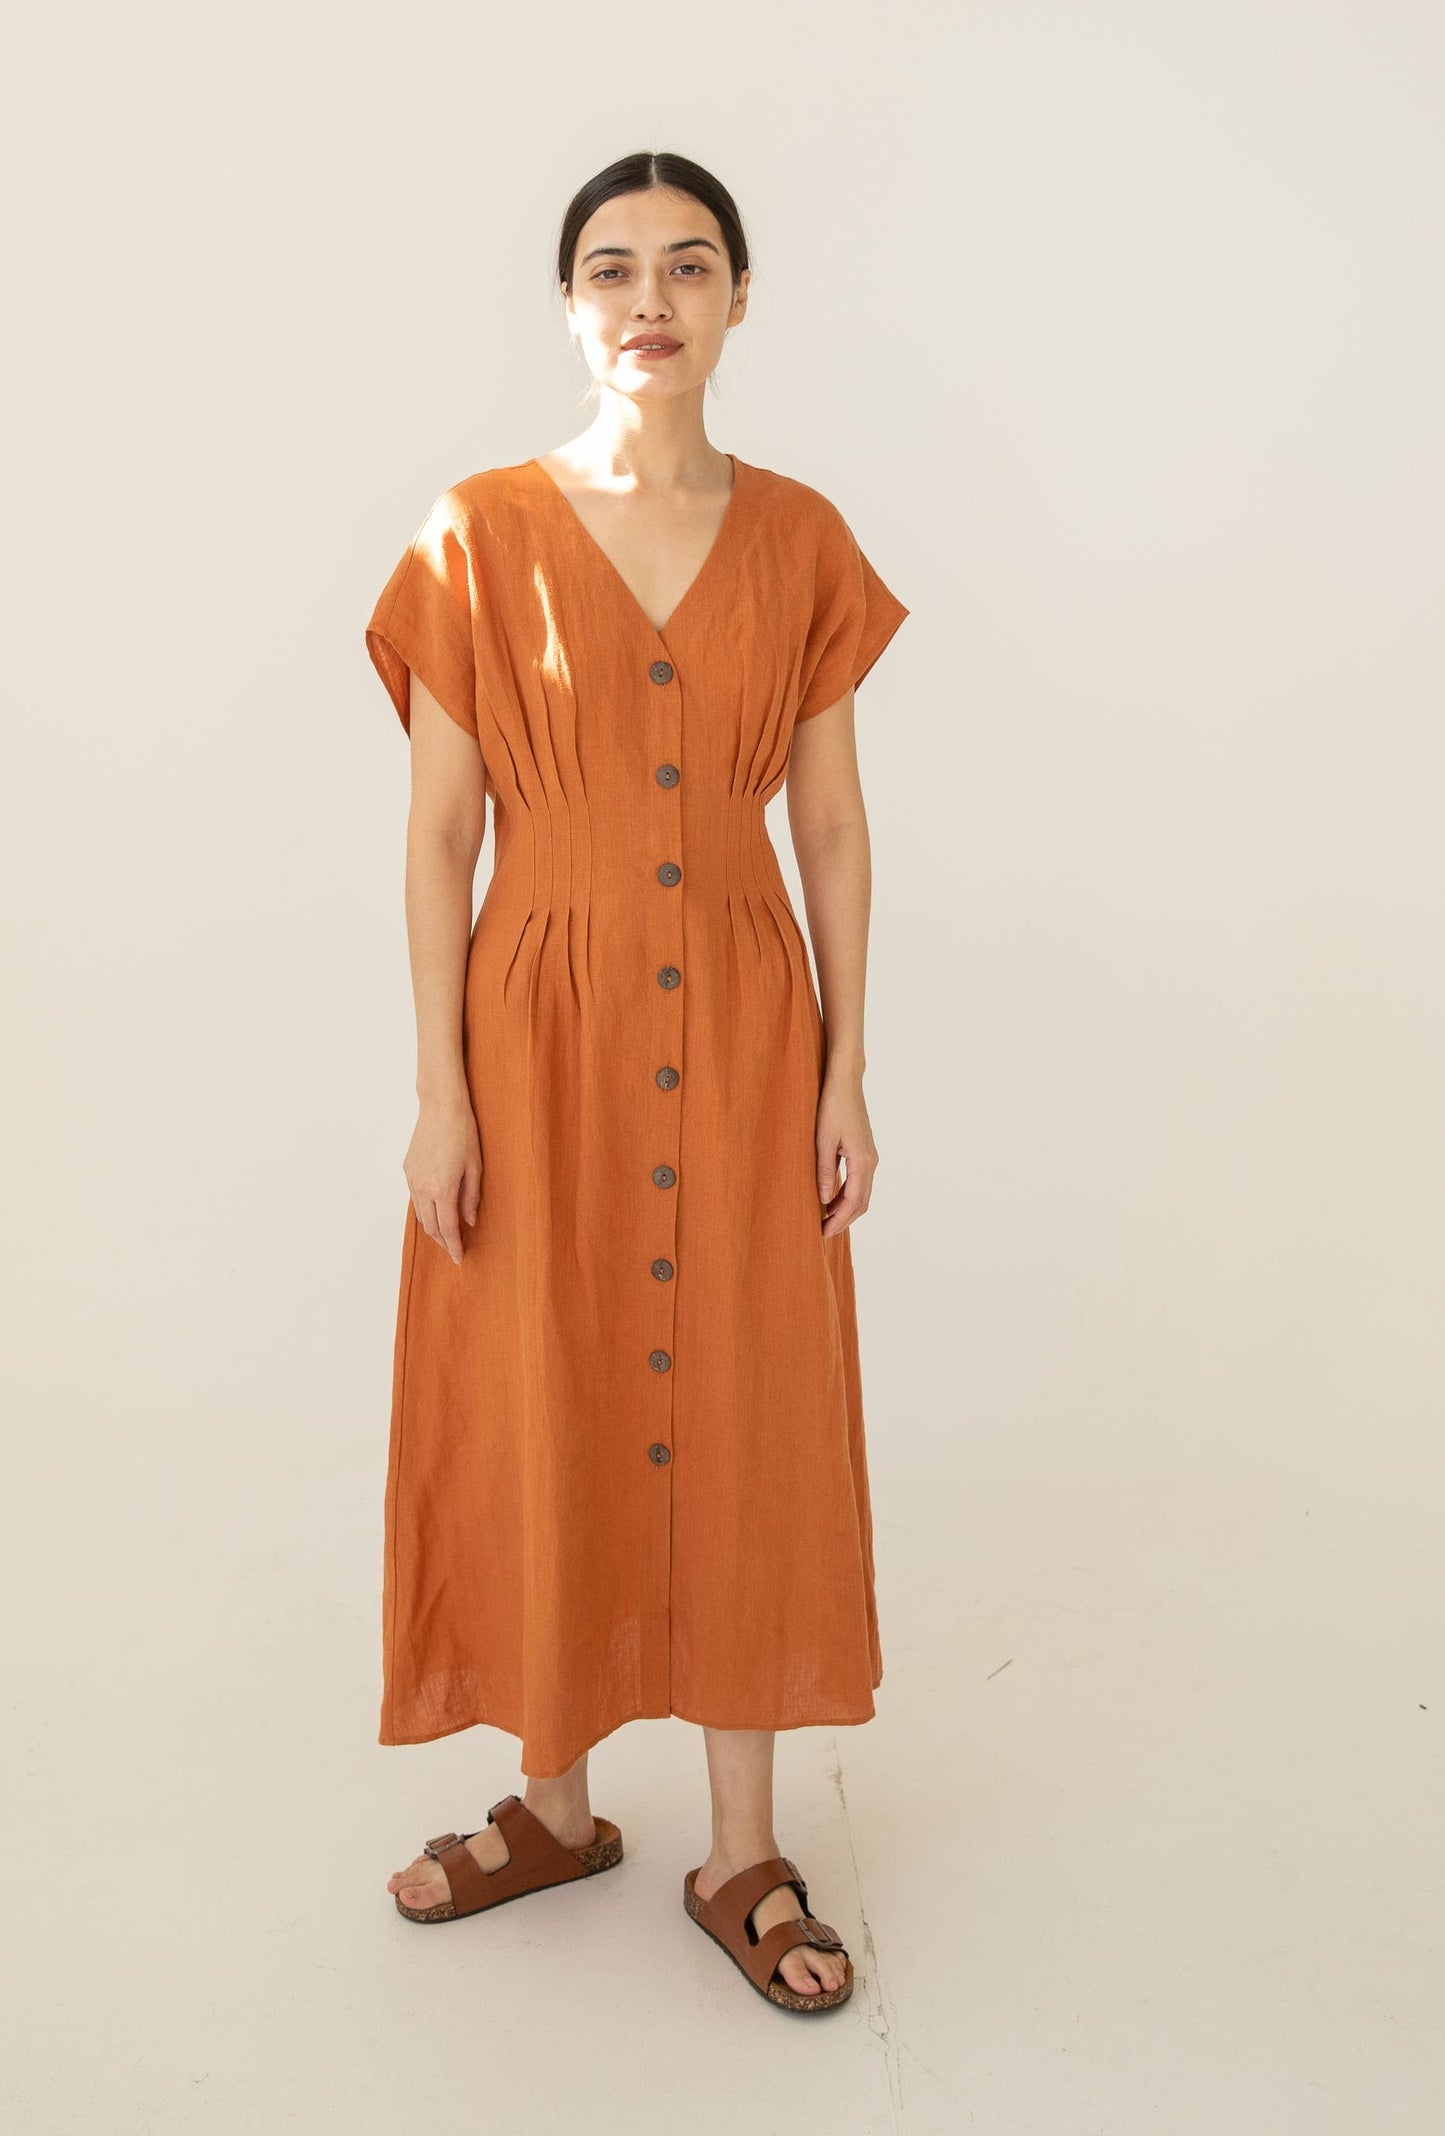 VIKOLINO - Linen Long Dress, Linen Charlotte Dress: Rust